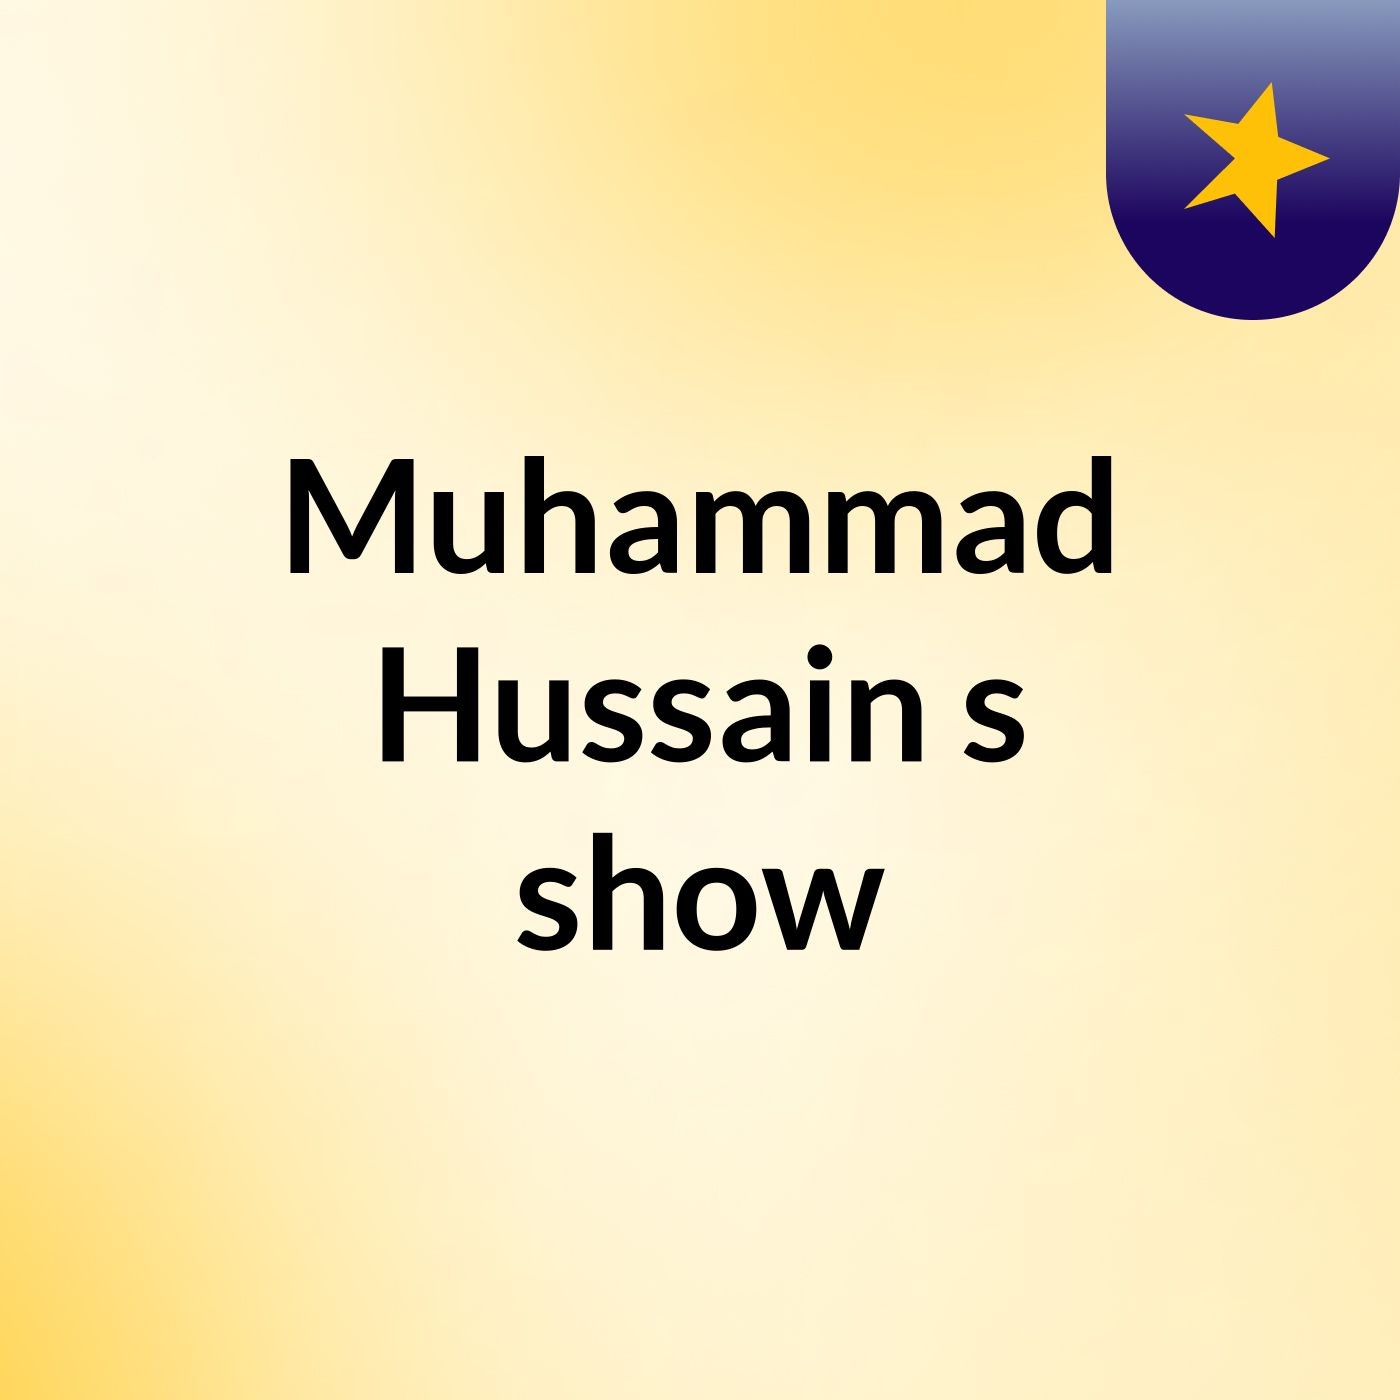 Muhammad Hussain's show